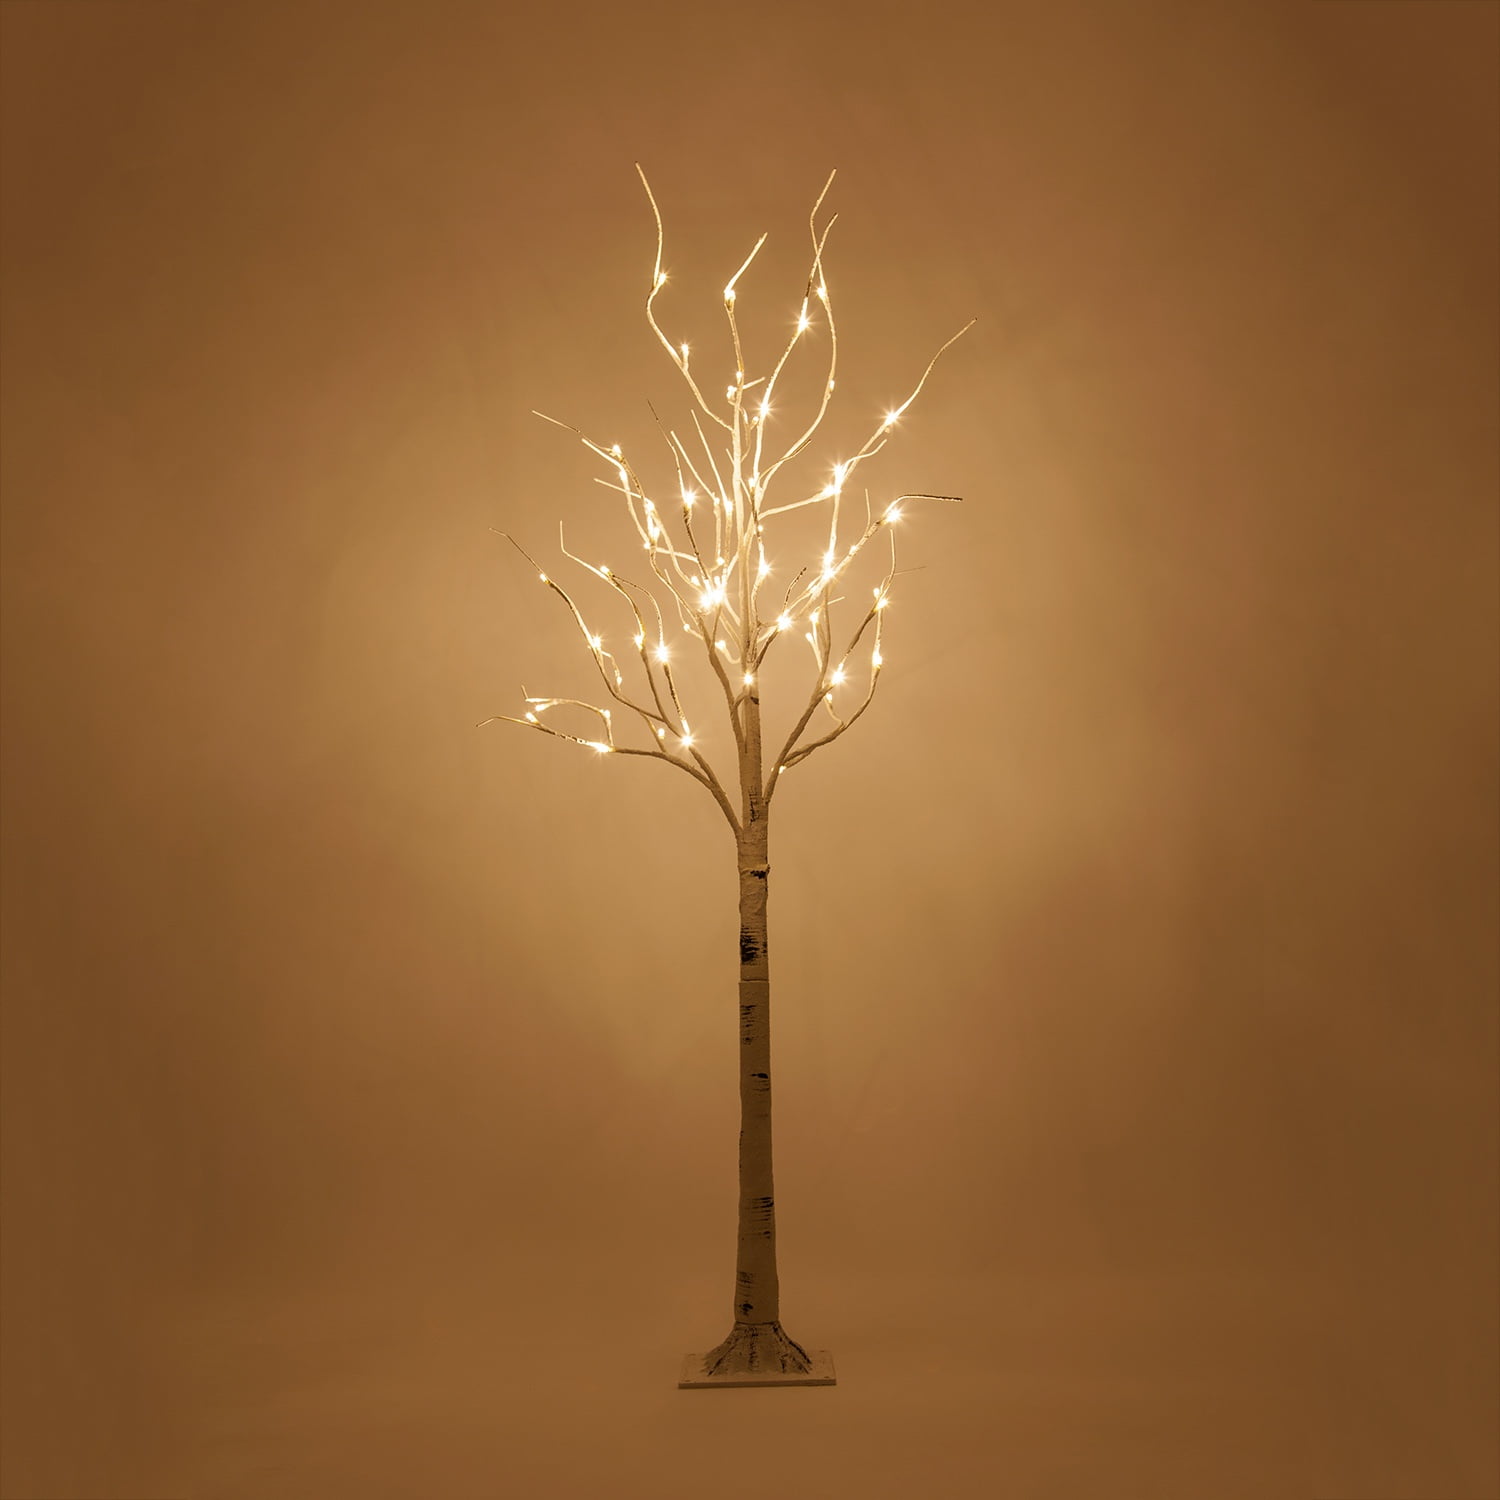 Kringle Traditions 5ft LED White Birch Tree Light, 60 Warm White LED Lights, Flexible Decorative